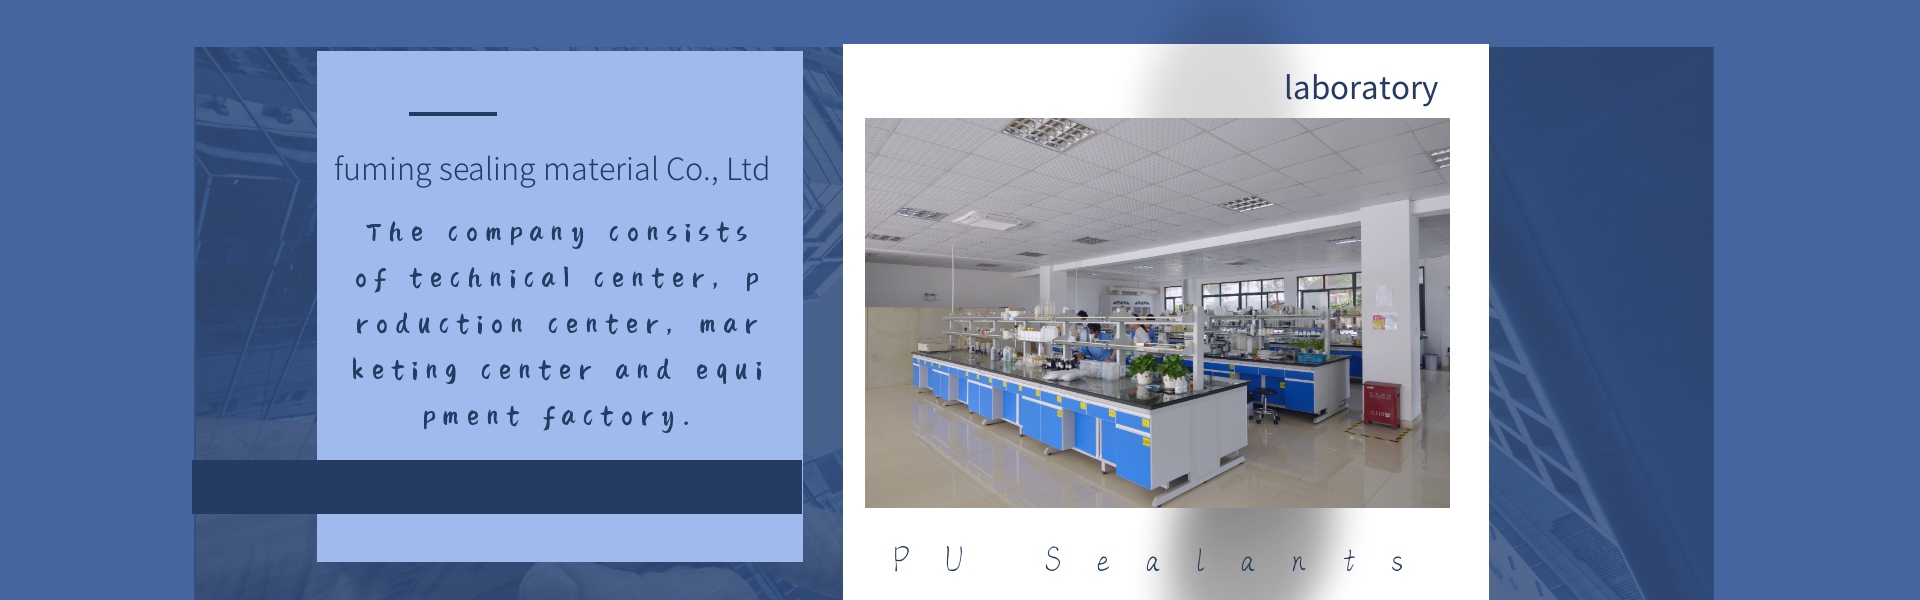 sigillante elettronico, sigillanti PU, sigillante per filtri,Dongguan fuming sealing material Co., Ltd